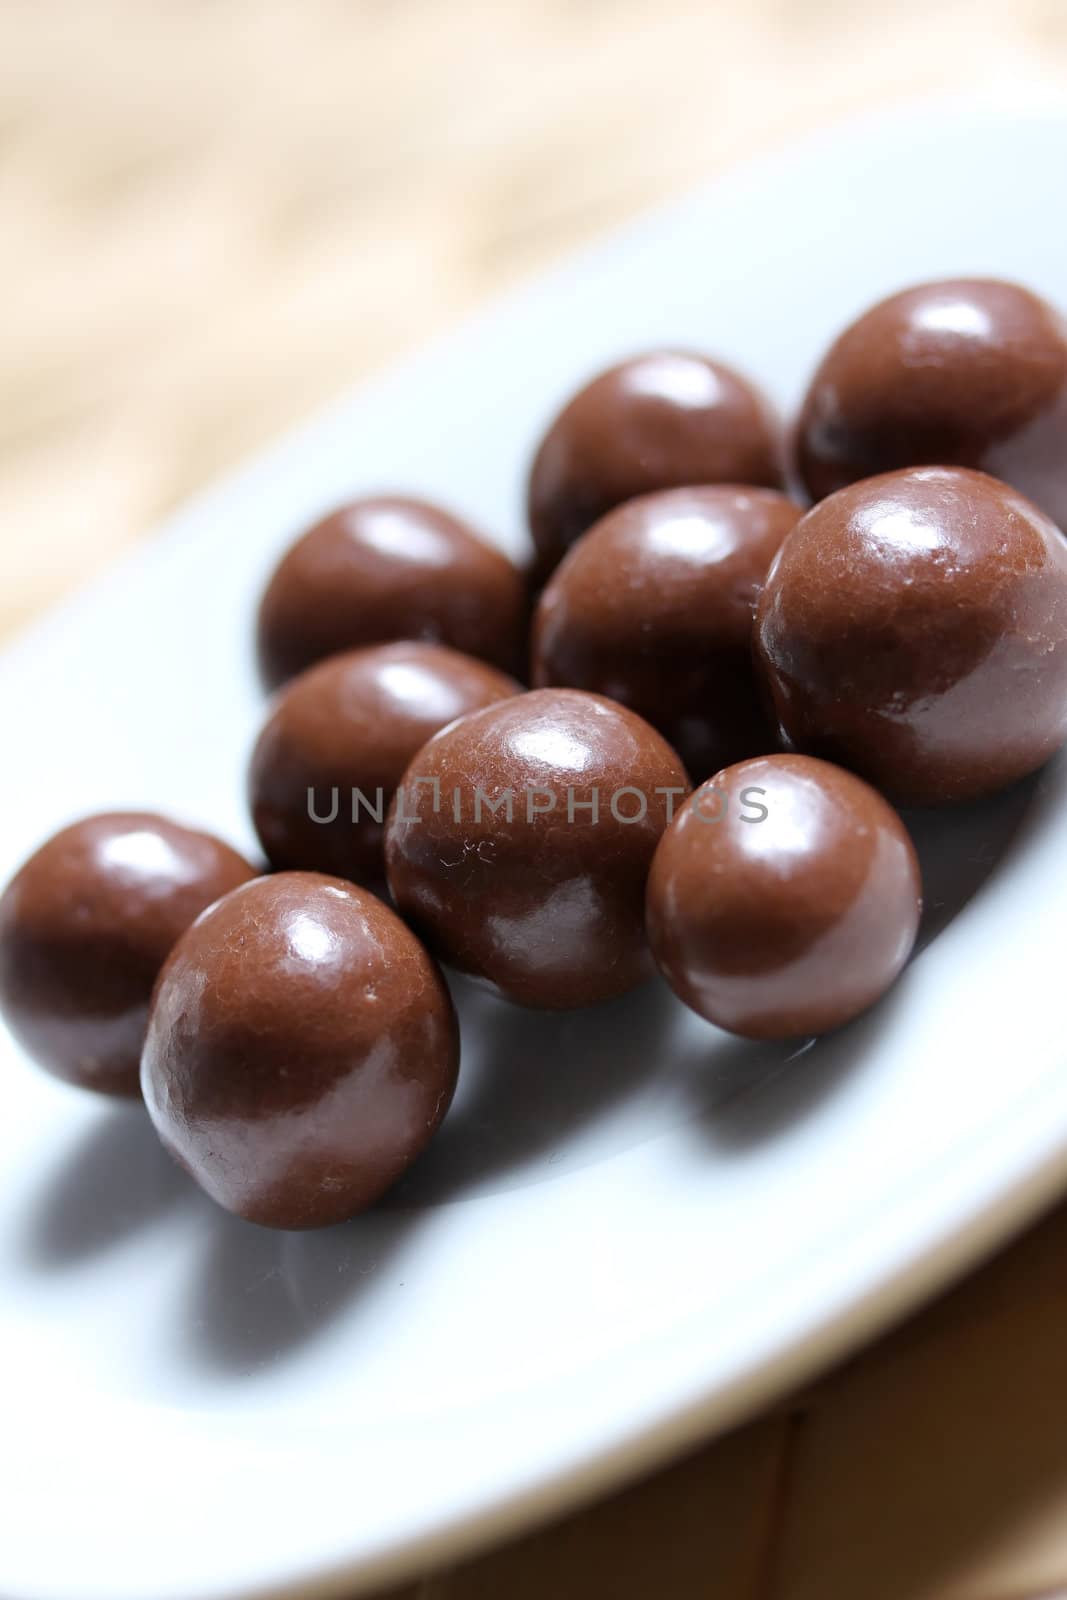 chocolate balls by Teka77